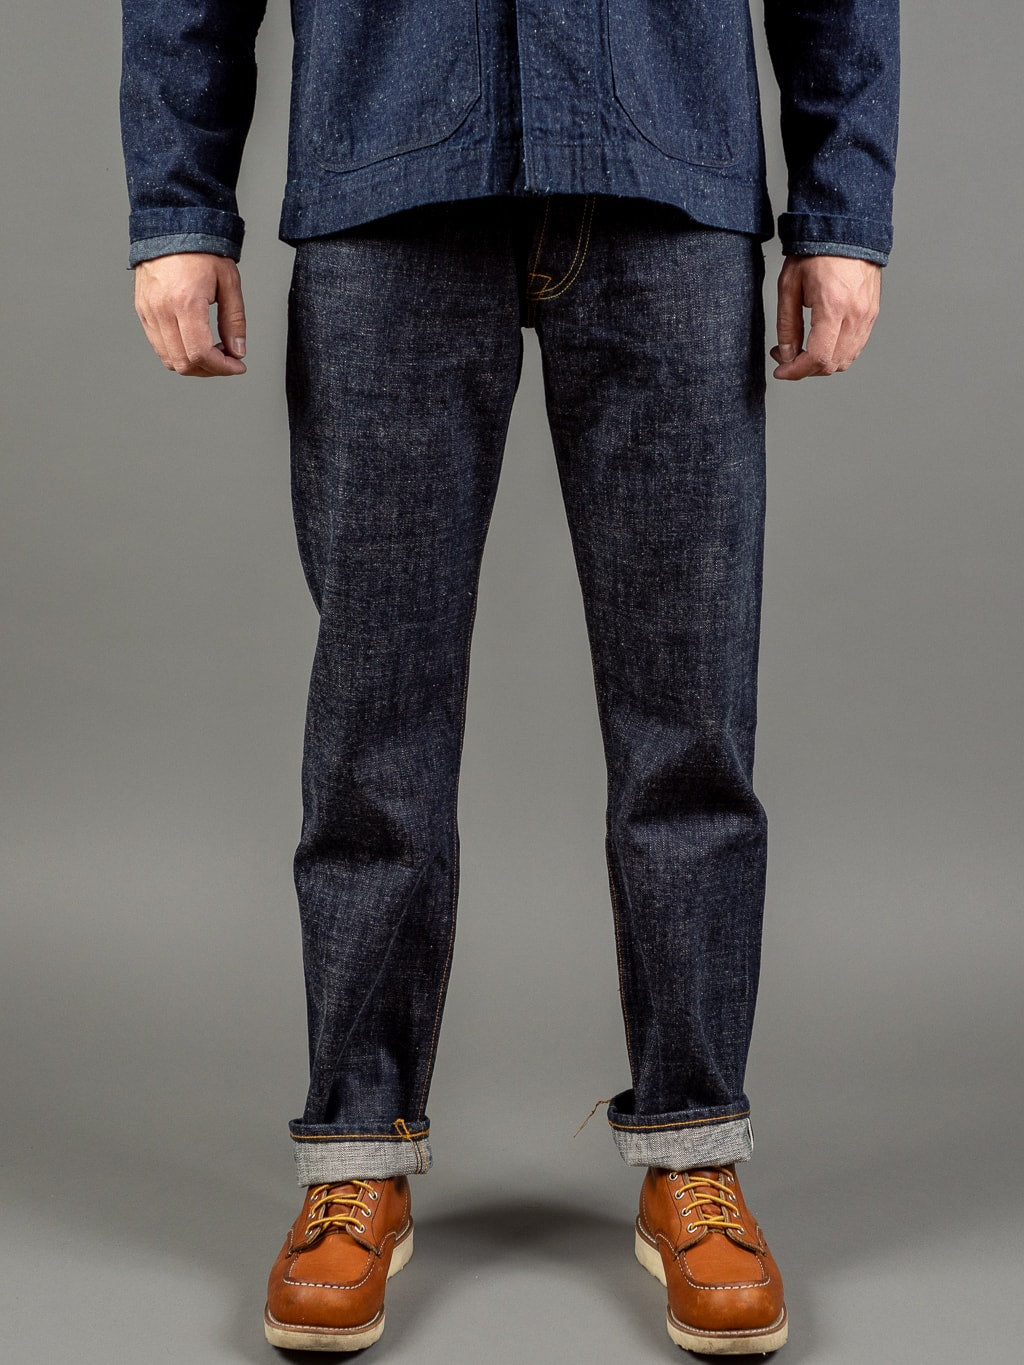 trophy clothing 1605 standard dirt denim japanese jeans front